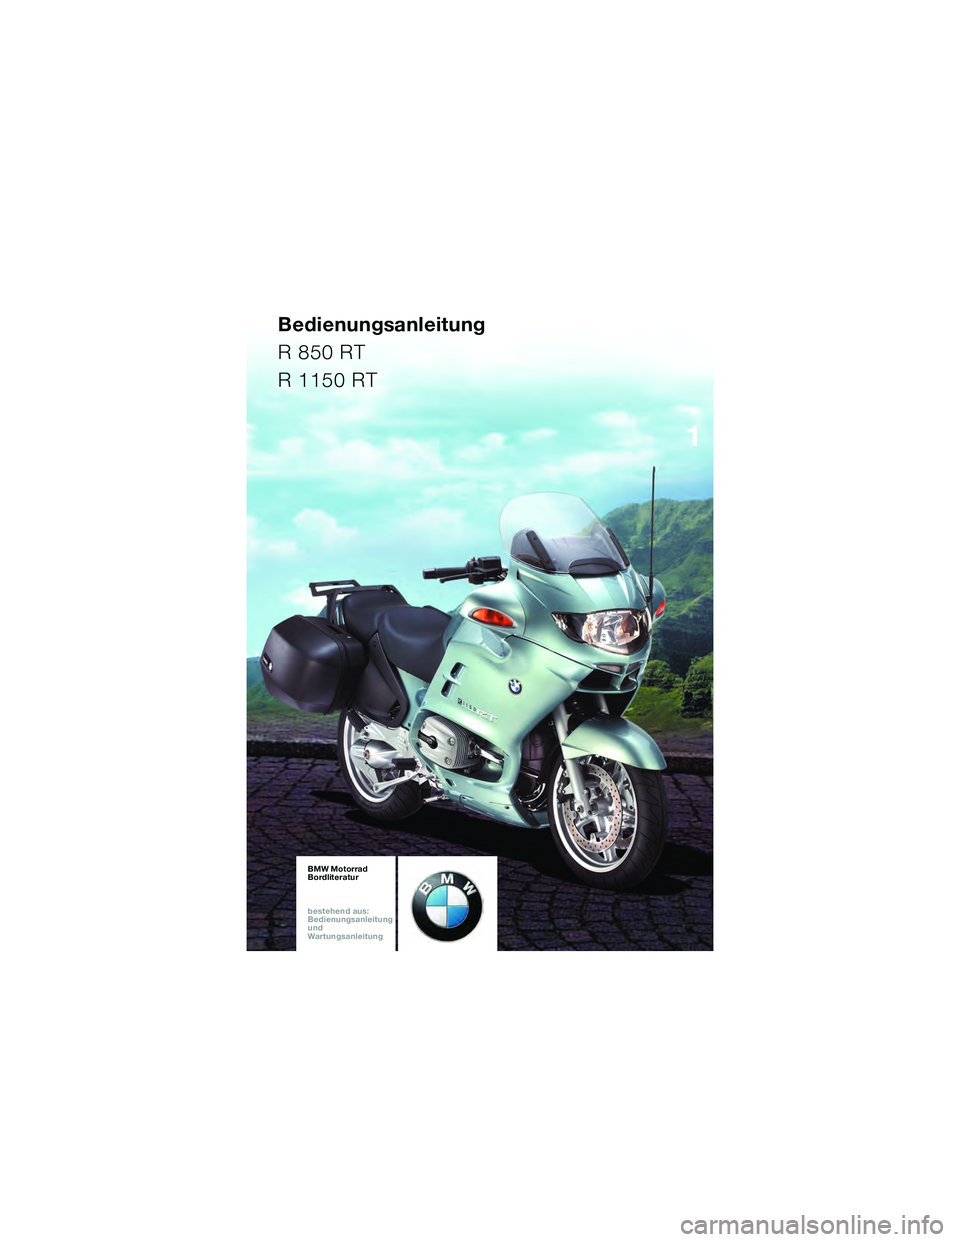 BMW MOTORRAD R 1150 RT 2002  Betriebsanleitung (in German) 
BMW Motorrad
Bordliteratur
bestehen d aus:
Bedienungsanleitung
und
War tungsanleitung
\b
/;6=/+
/6=/+
10r22bkd3.book  Seite 85  Montag, 4. April 2005  4:24 16 